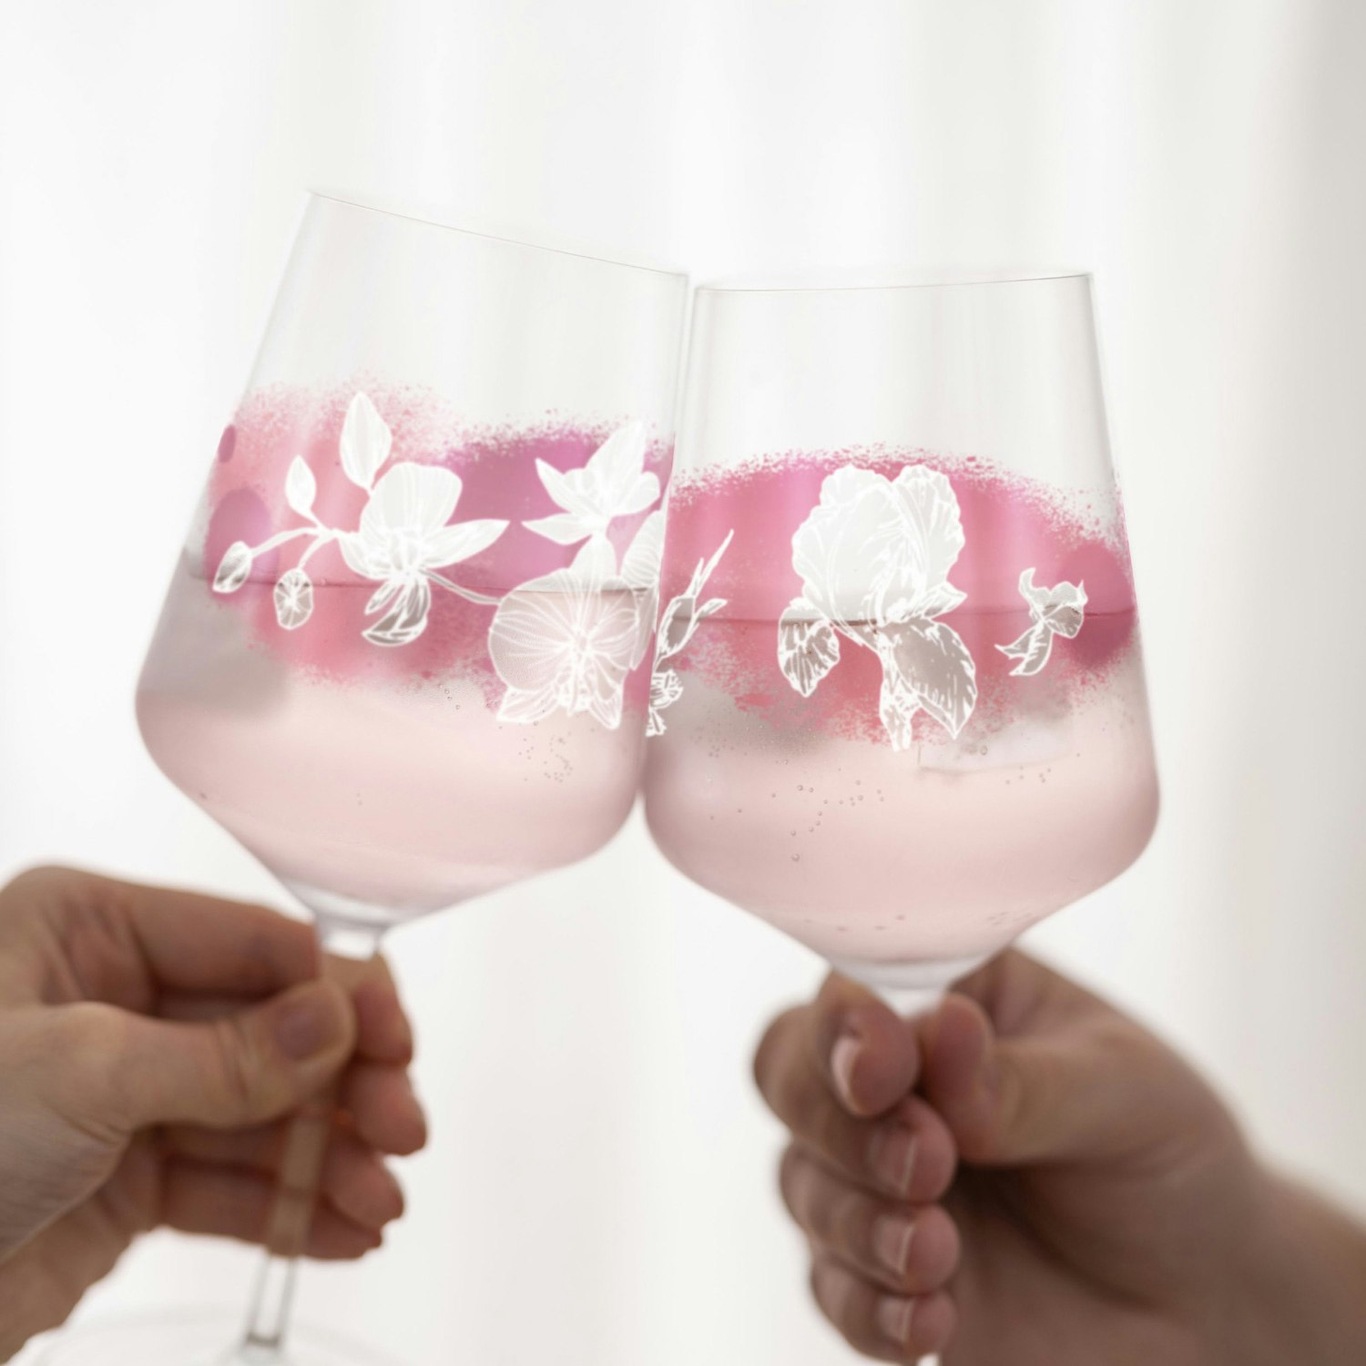 https://royaldesign.com/image/2/ritzenhoff-sommersonett-wine-glass-2-pack-no-3-0?w=800&quality=80